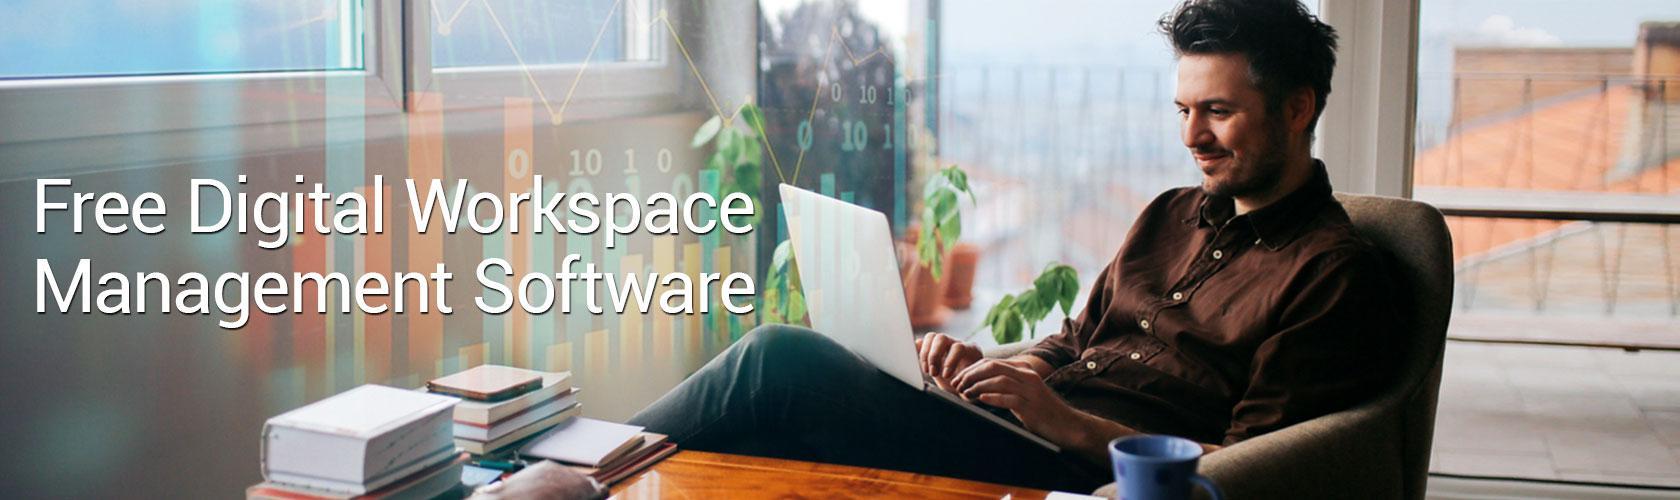 Free digital workspace management software from Liquidware